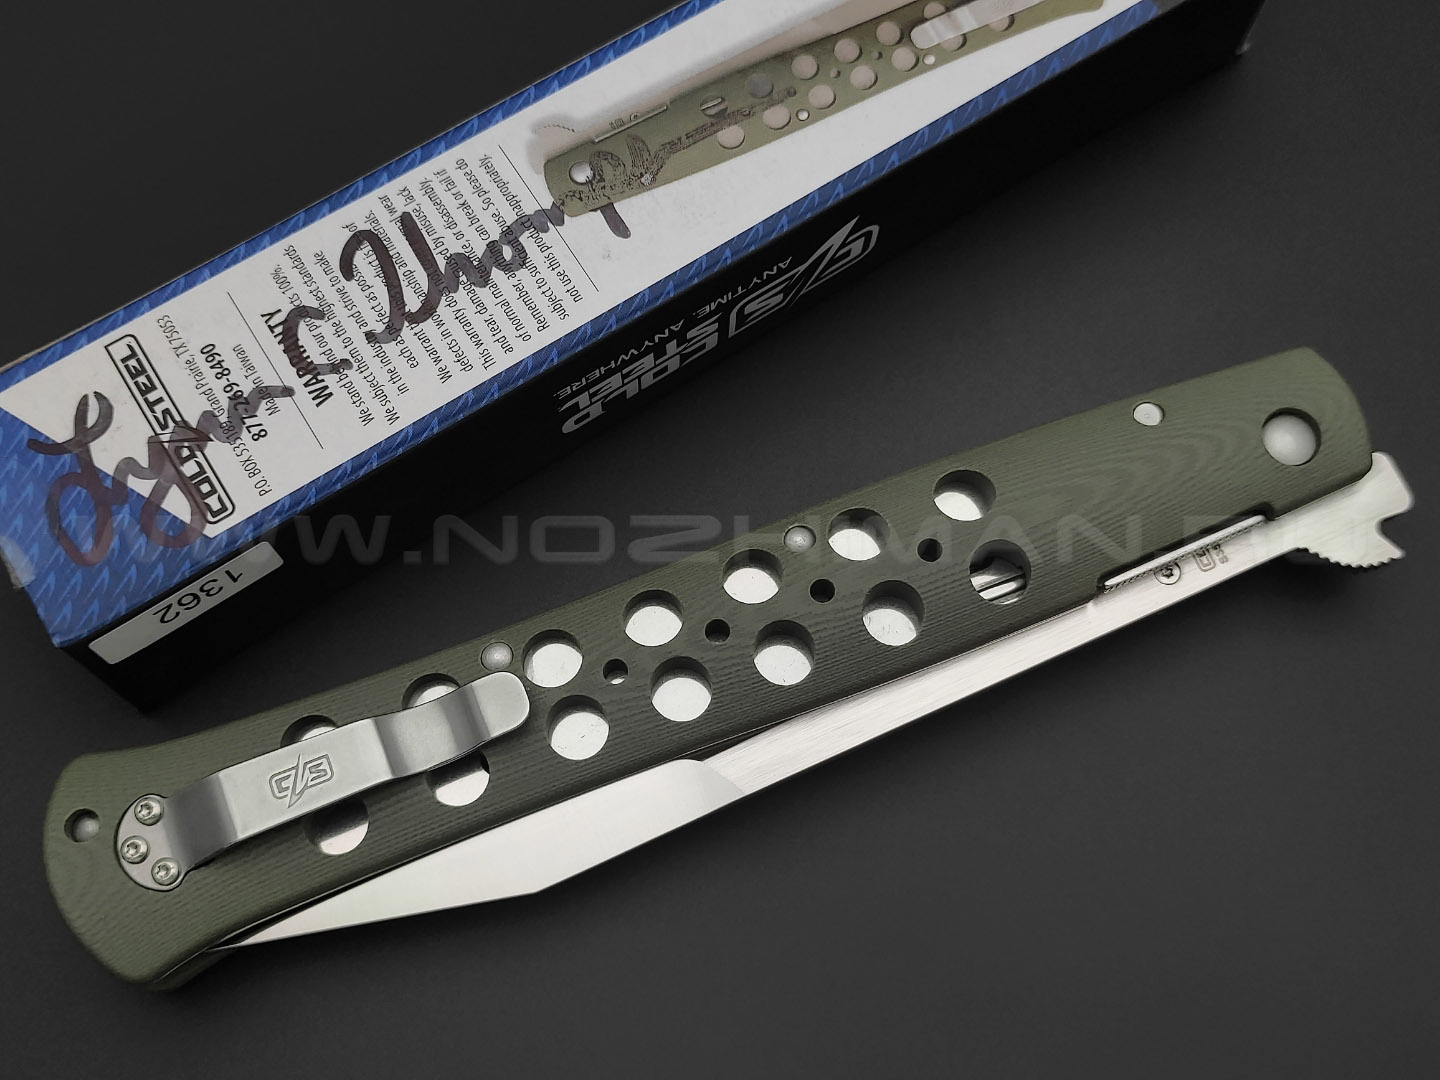 Нож Cold Steel Ti-Lite 6" Lynn Thompson Signature 26C6AA сталь CPM S35VN, рукоять G10 OD green